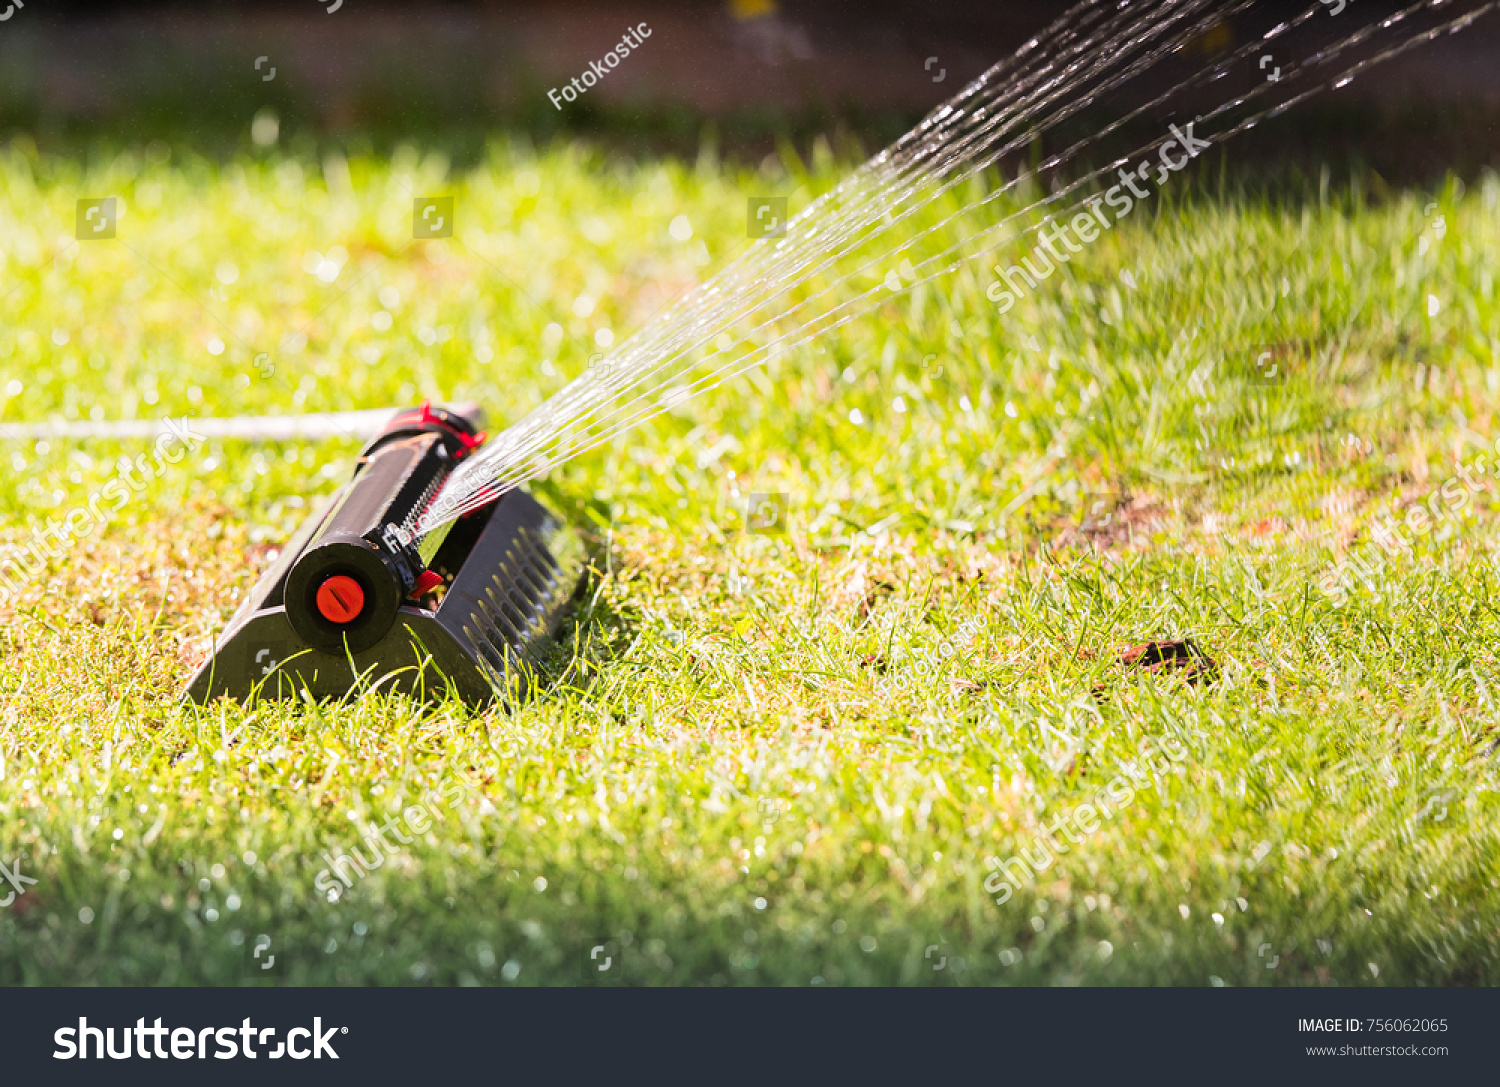 Sprinkler head spraying water on green lawn #756062065